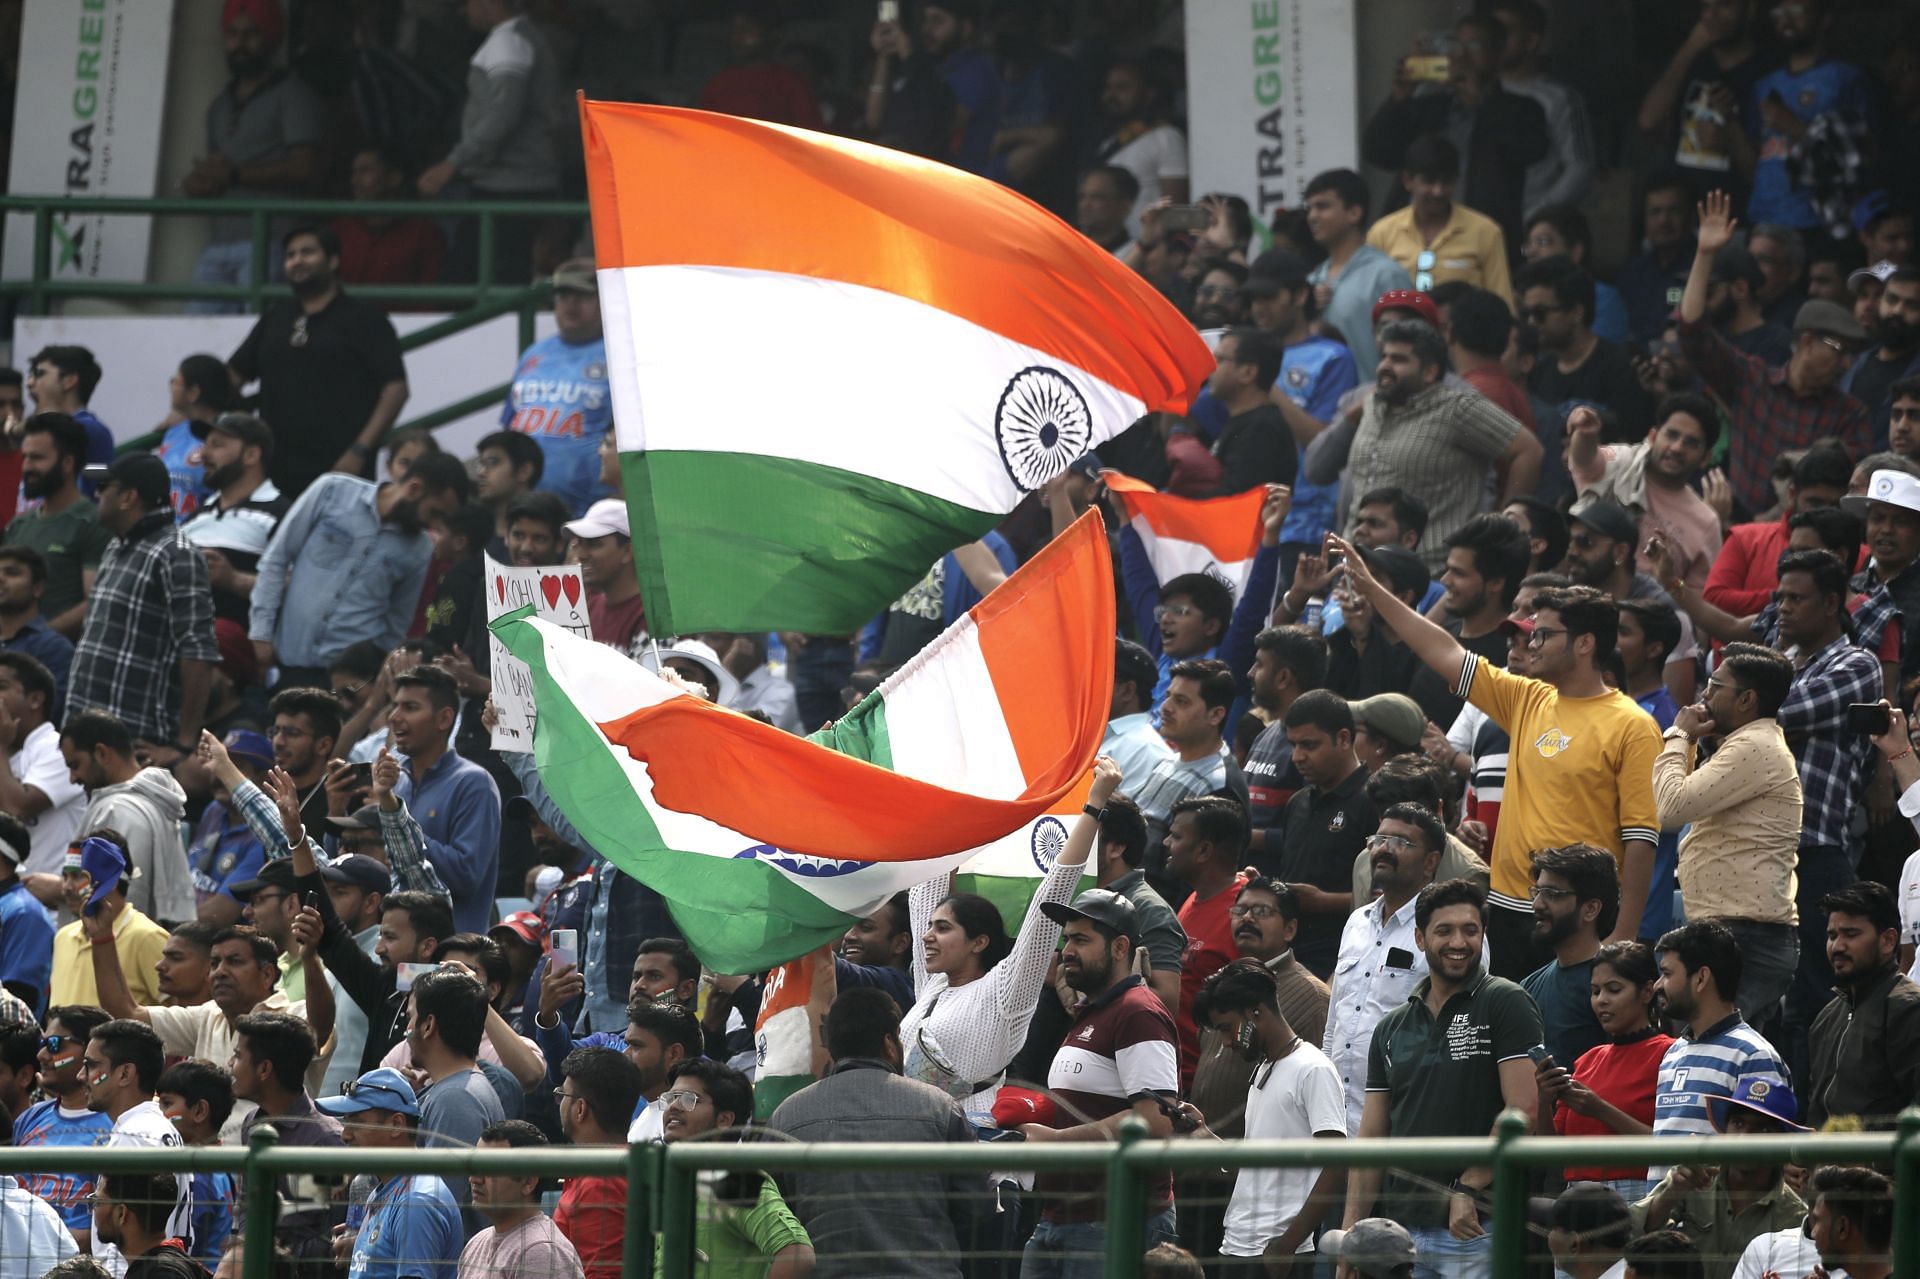 India v Australia - 2nd Test: Day 2